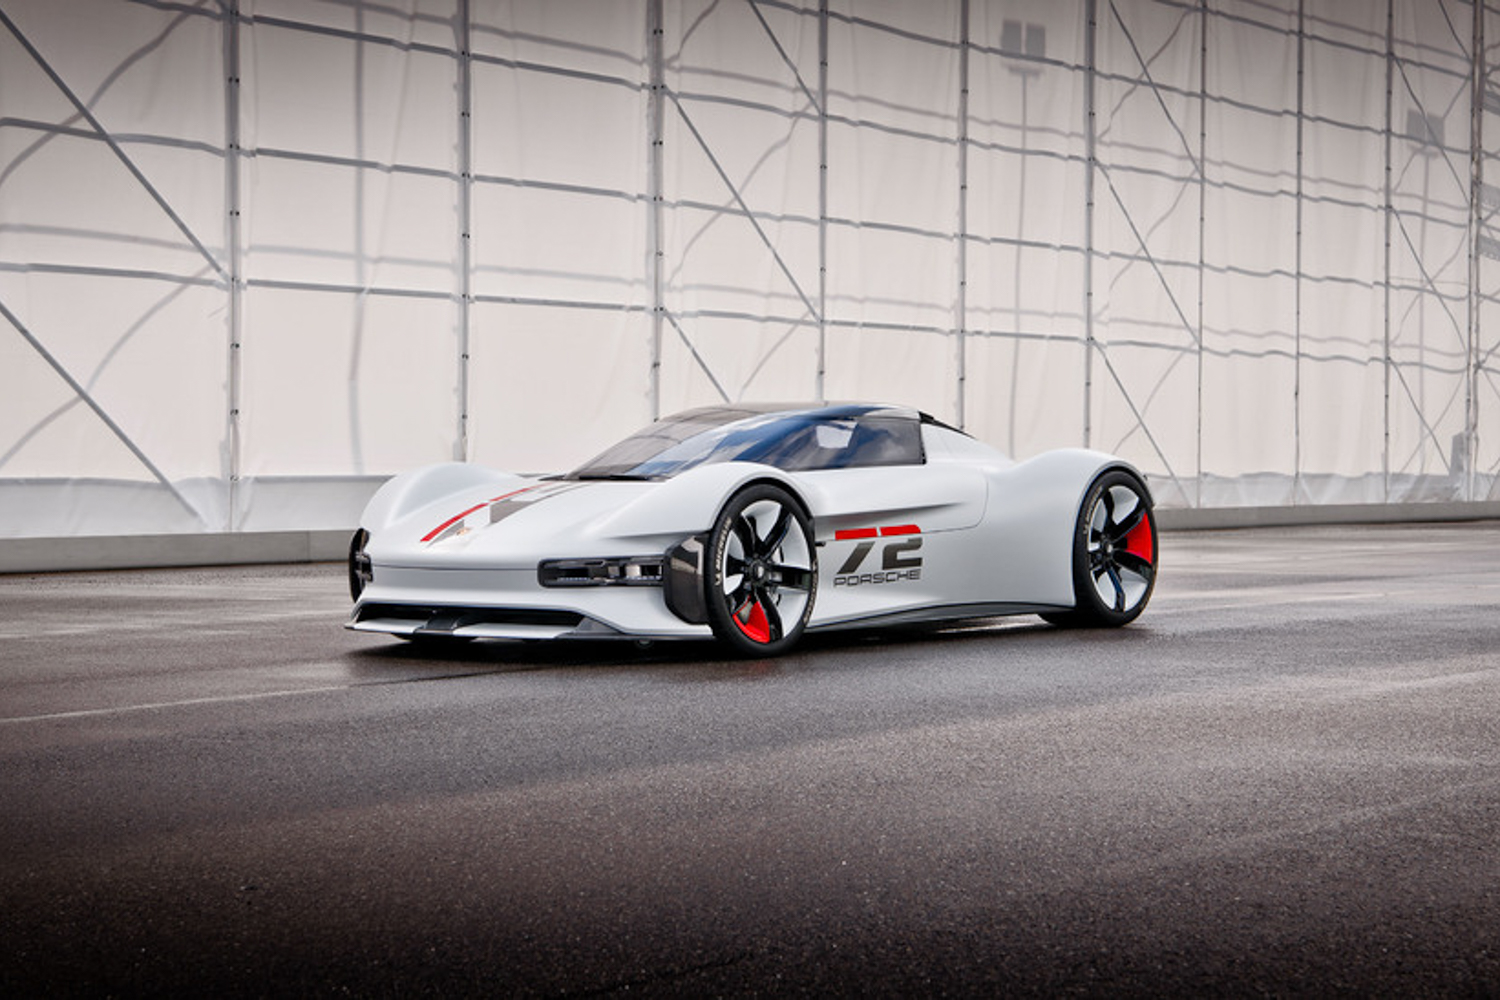 Car News | Porsche shows off electric Gran Turismo racing car | CompleteCar.ie